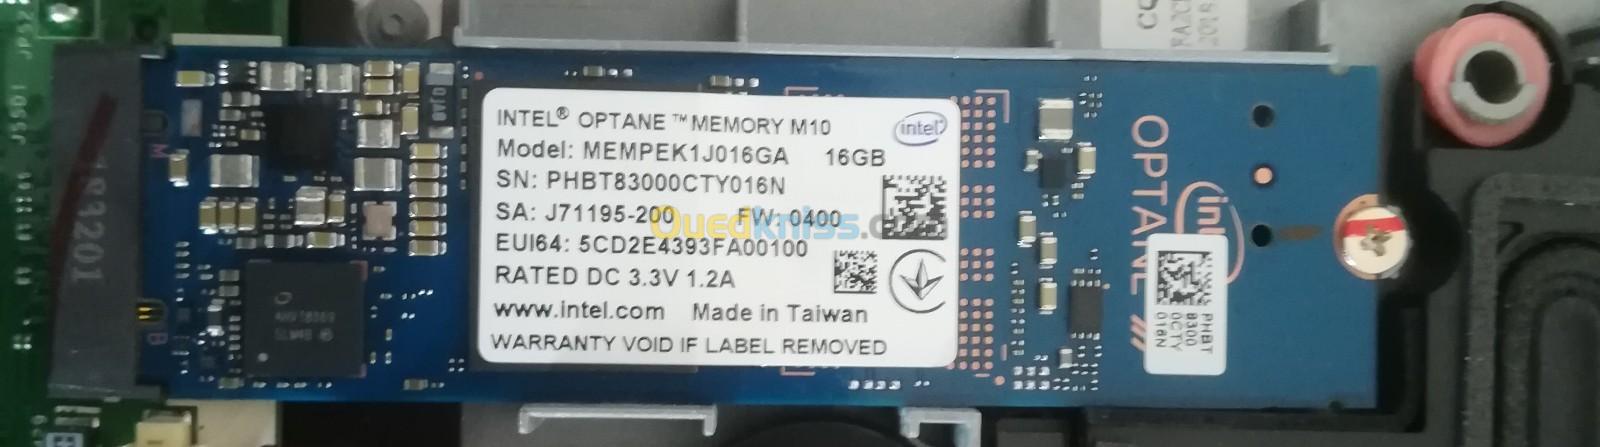 Mémoire M10 SSD (RAM) + HDD